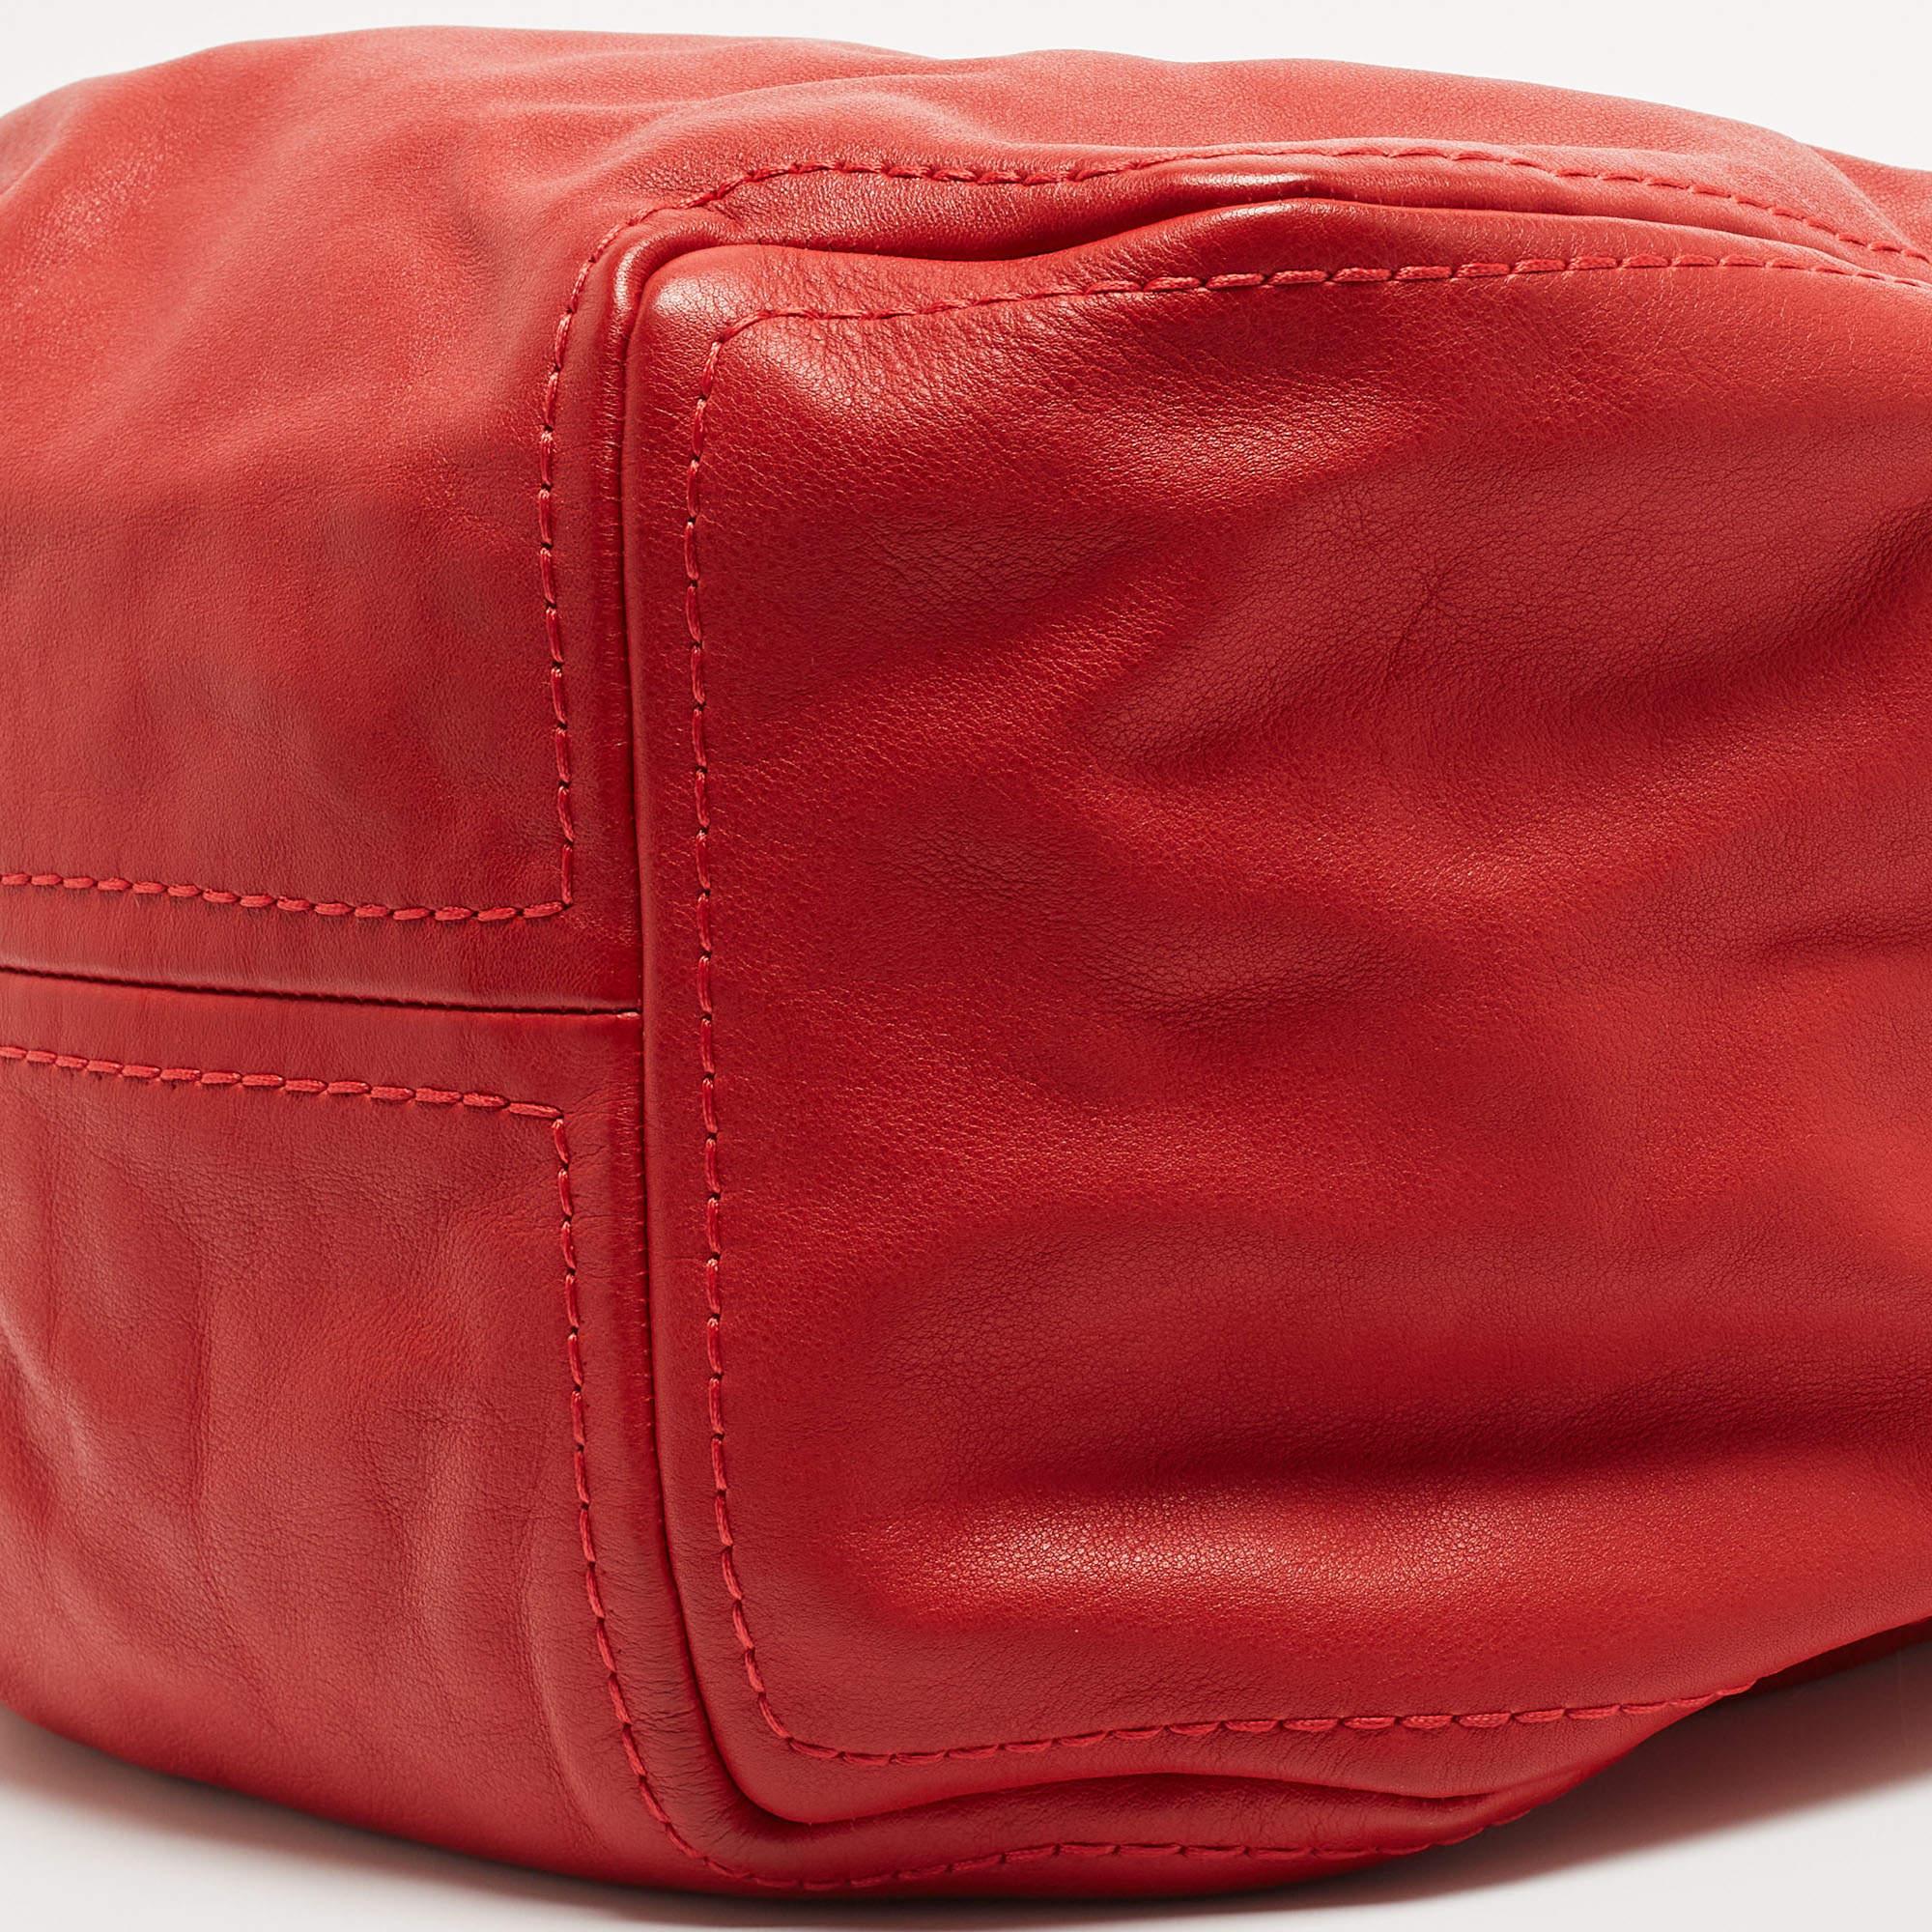 Jimmy Choo Red Leather Enamel Handle Hobo For Sale 7